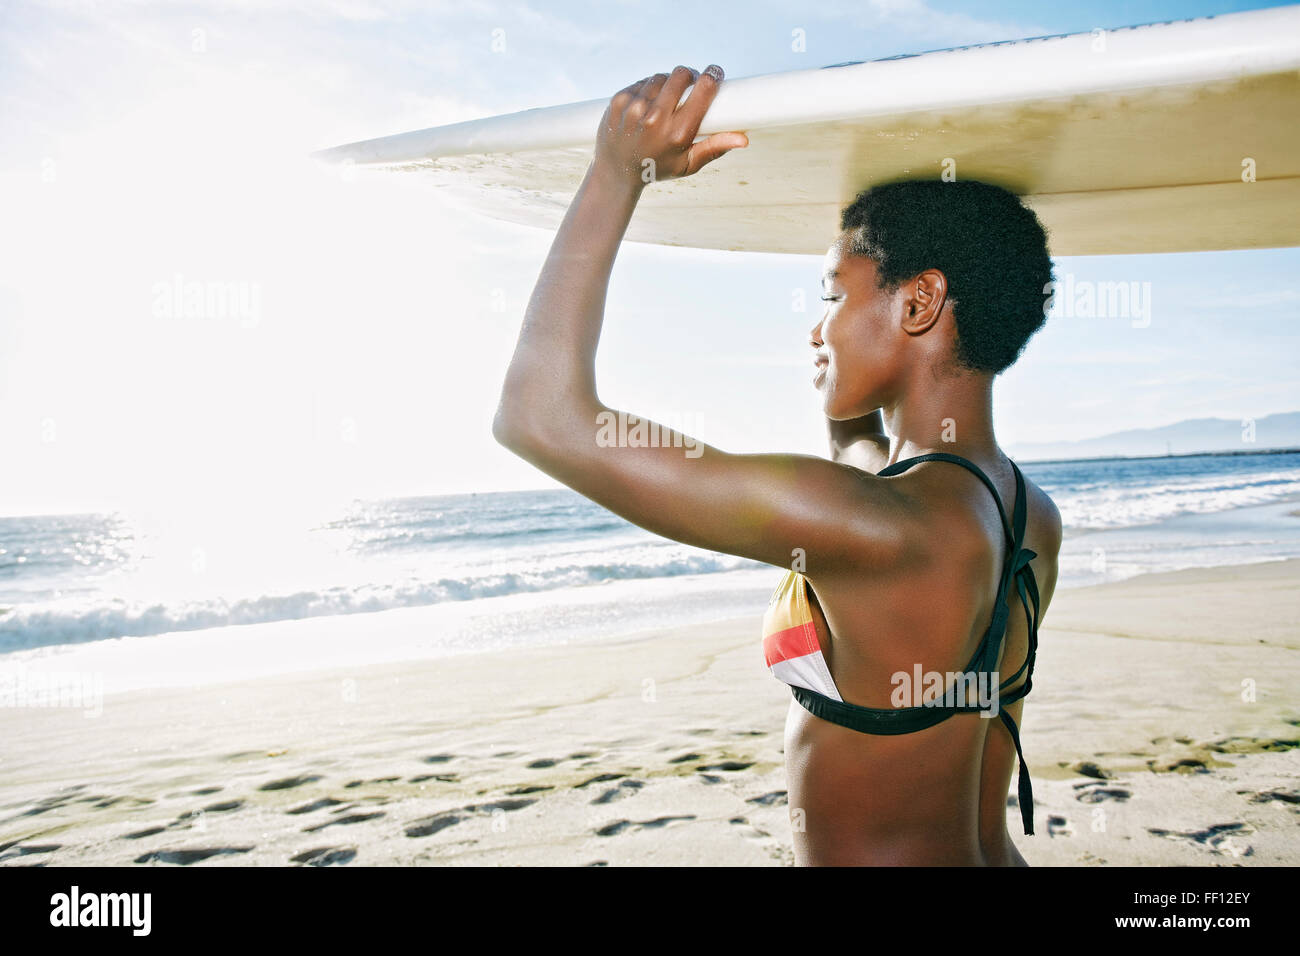 Black woman balancing surfboard on head at beach Stock Photo